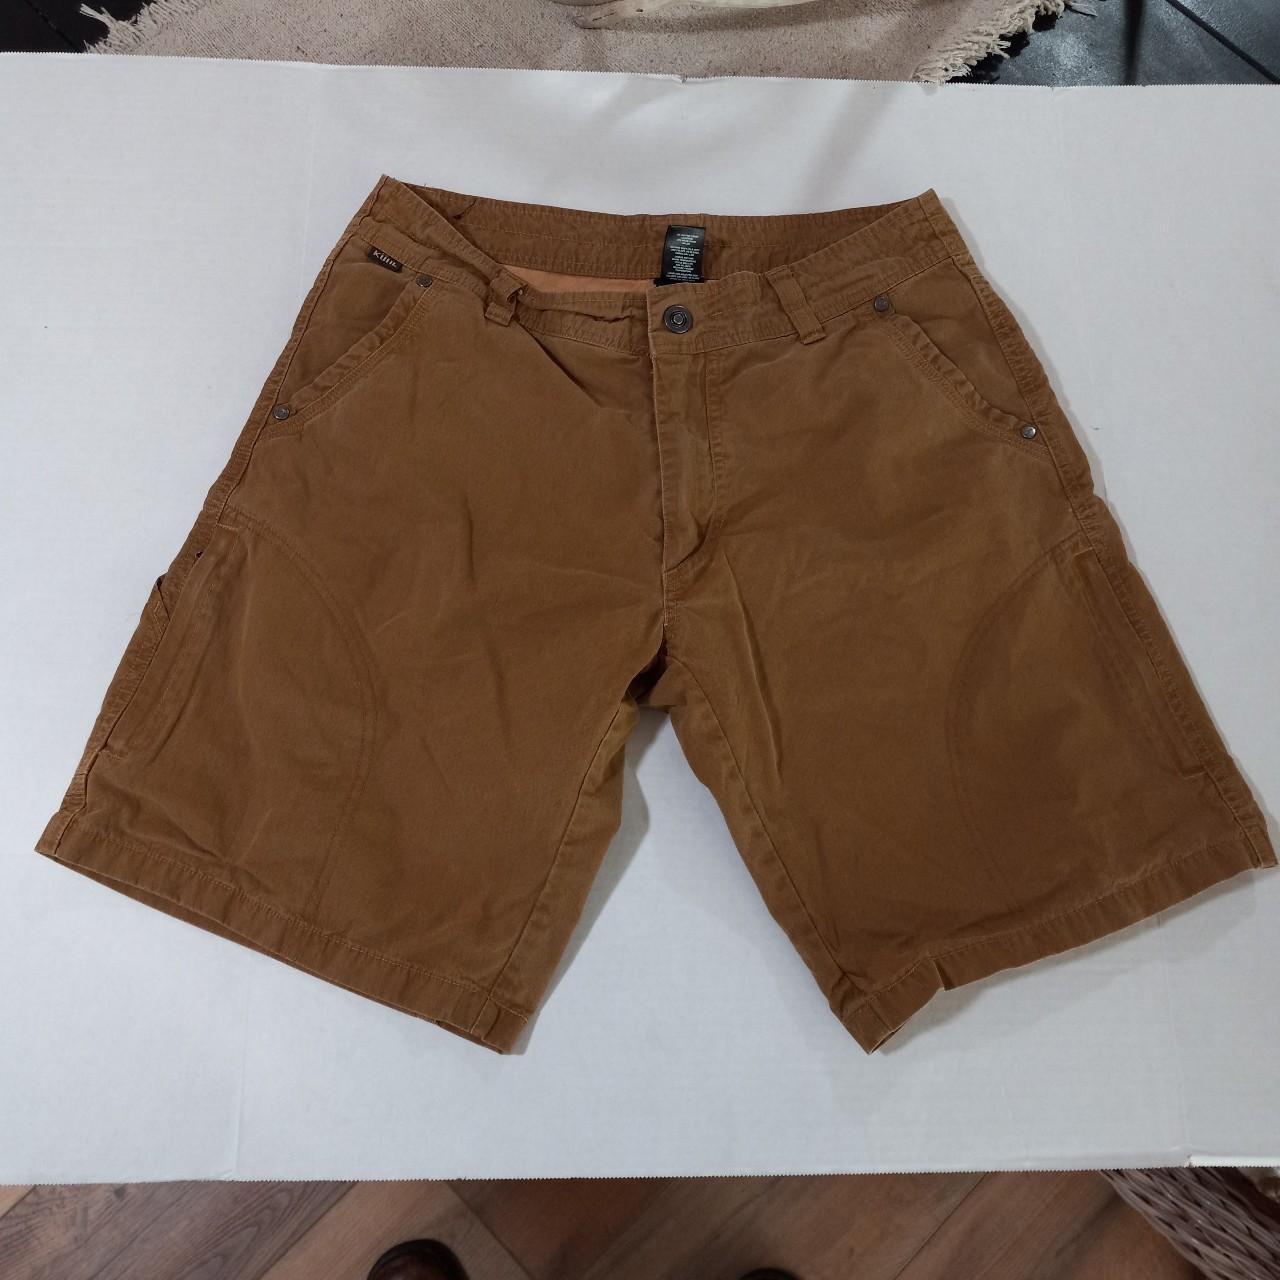 KULE Men's Brown and Khaki Shorts